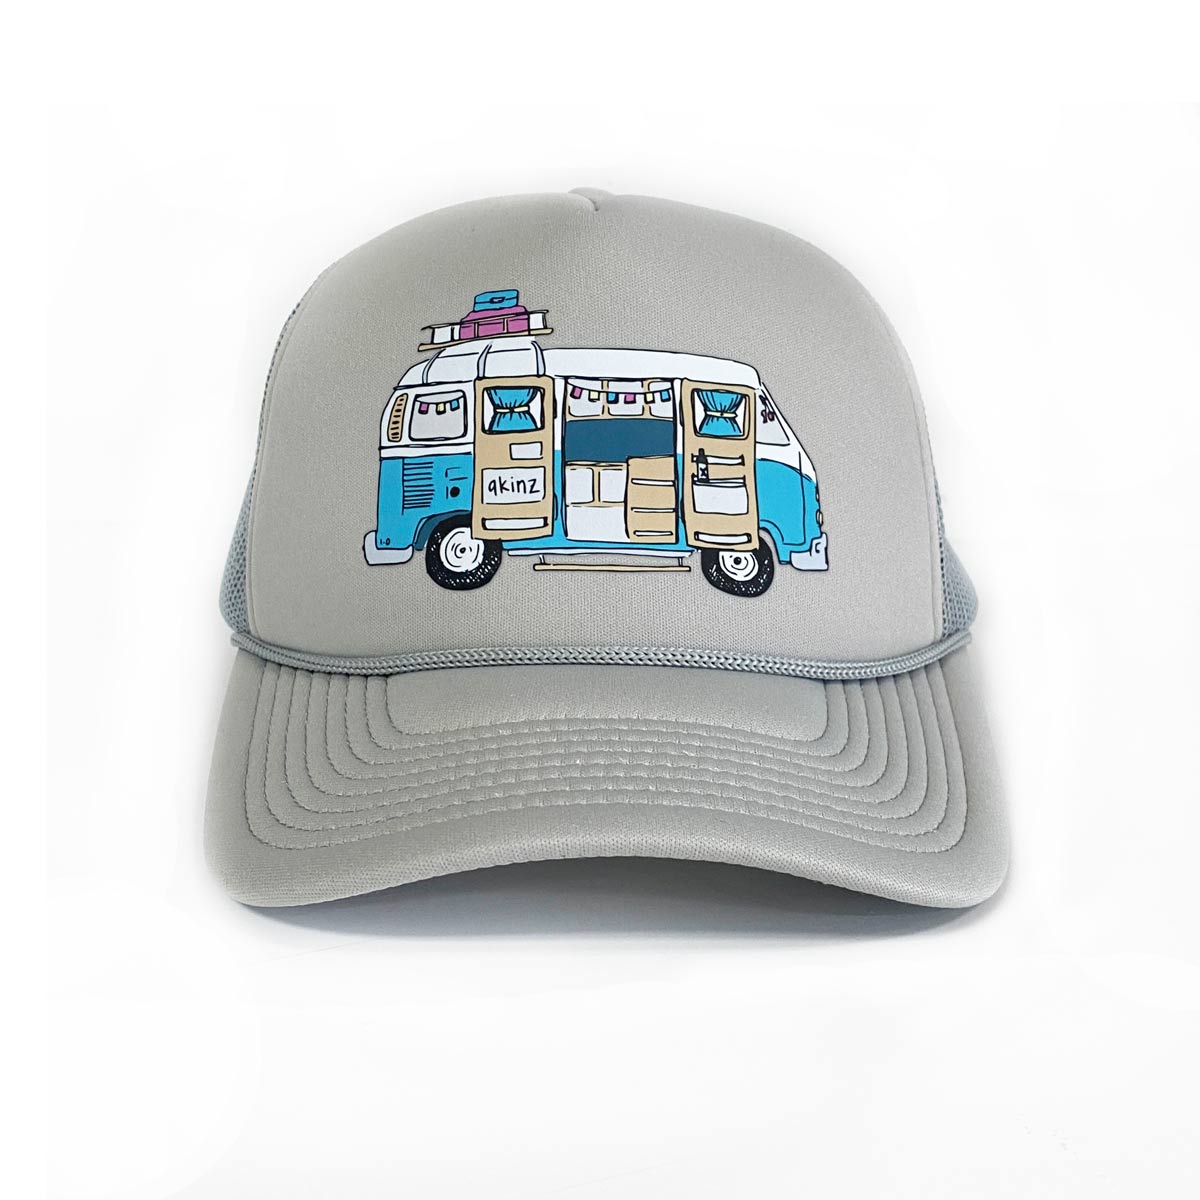 view-cruise-vw-van-silver-gray-trucker-hat.jpg